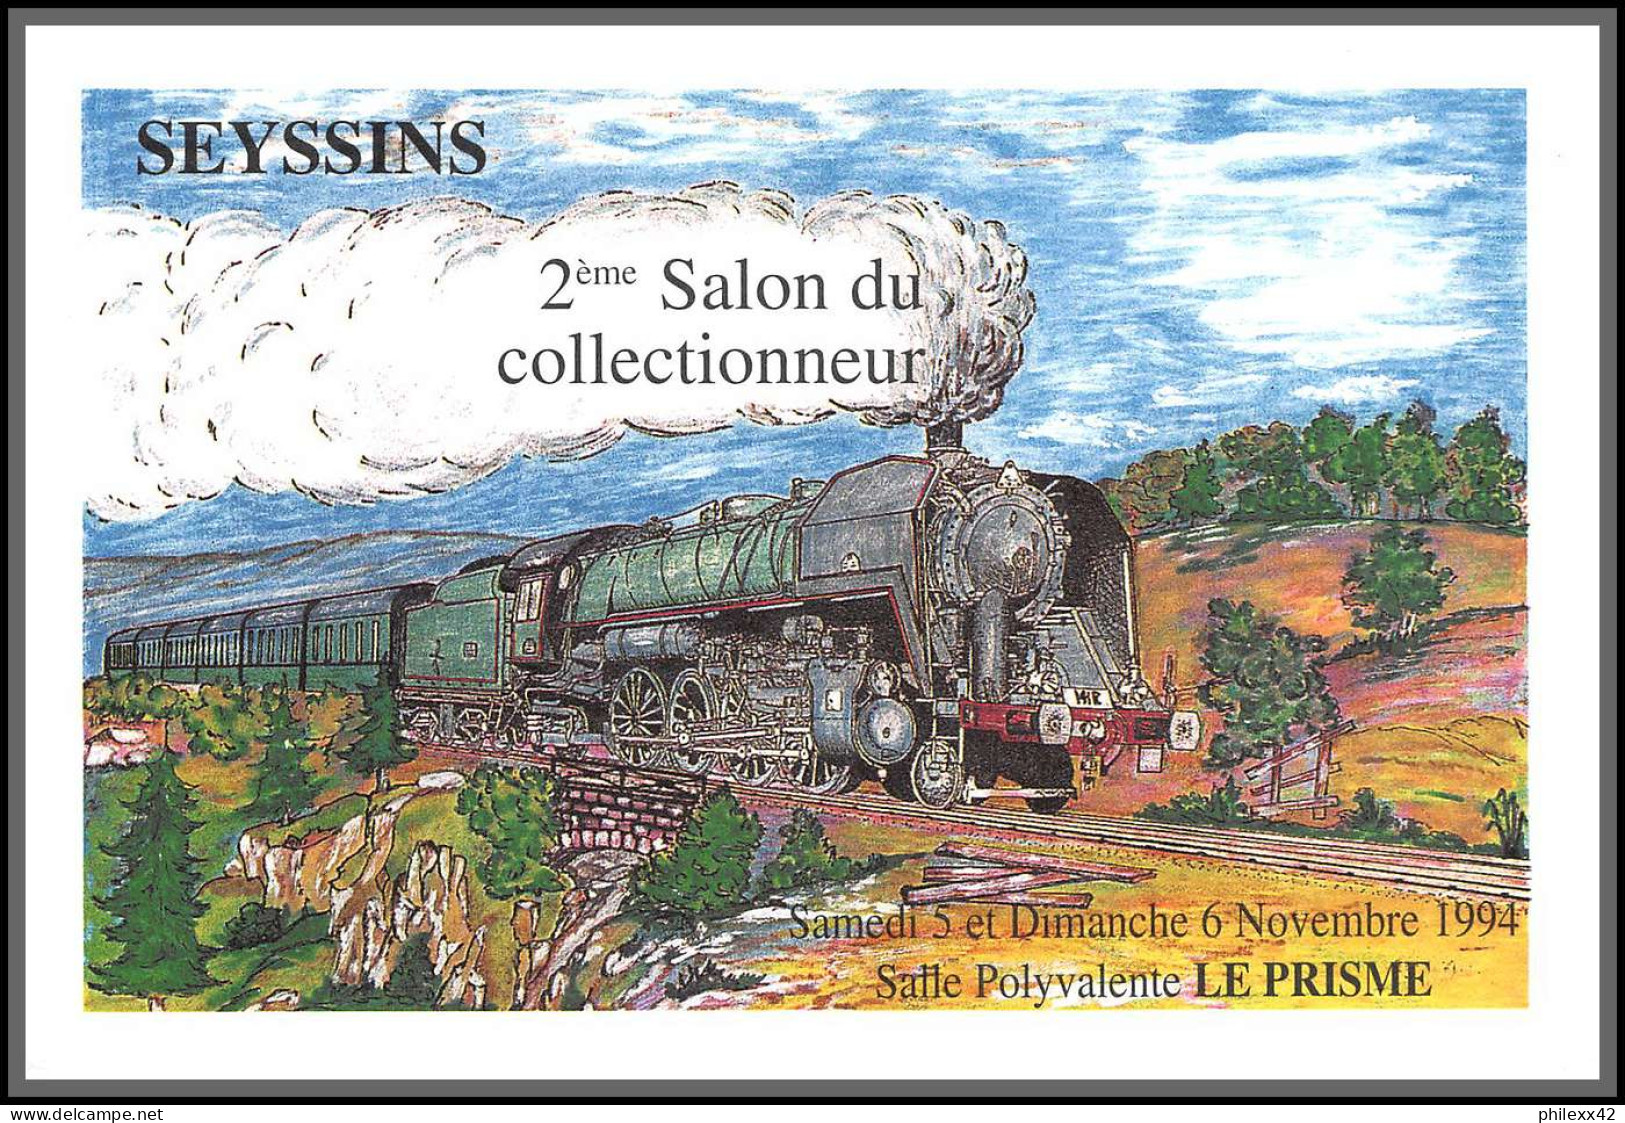 74241 Mixte Atm Briat 4/3/1997 M'tsangamouji Mayotte Echirolles Isère France Carte Postcard Colonies - Brieven En Documenten